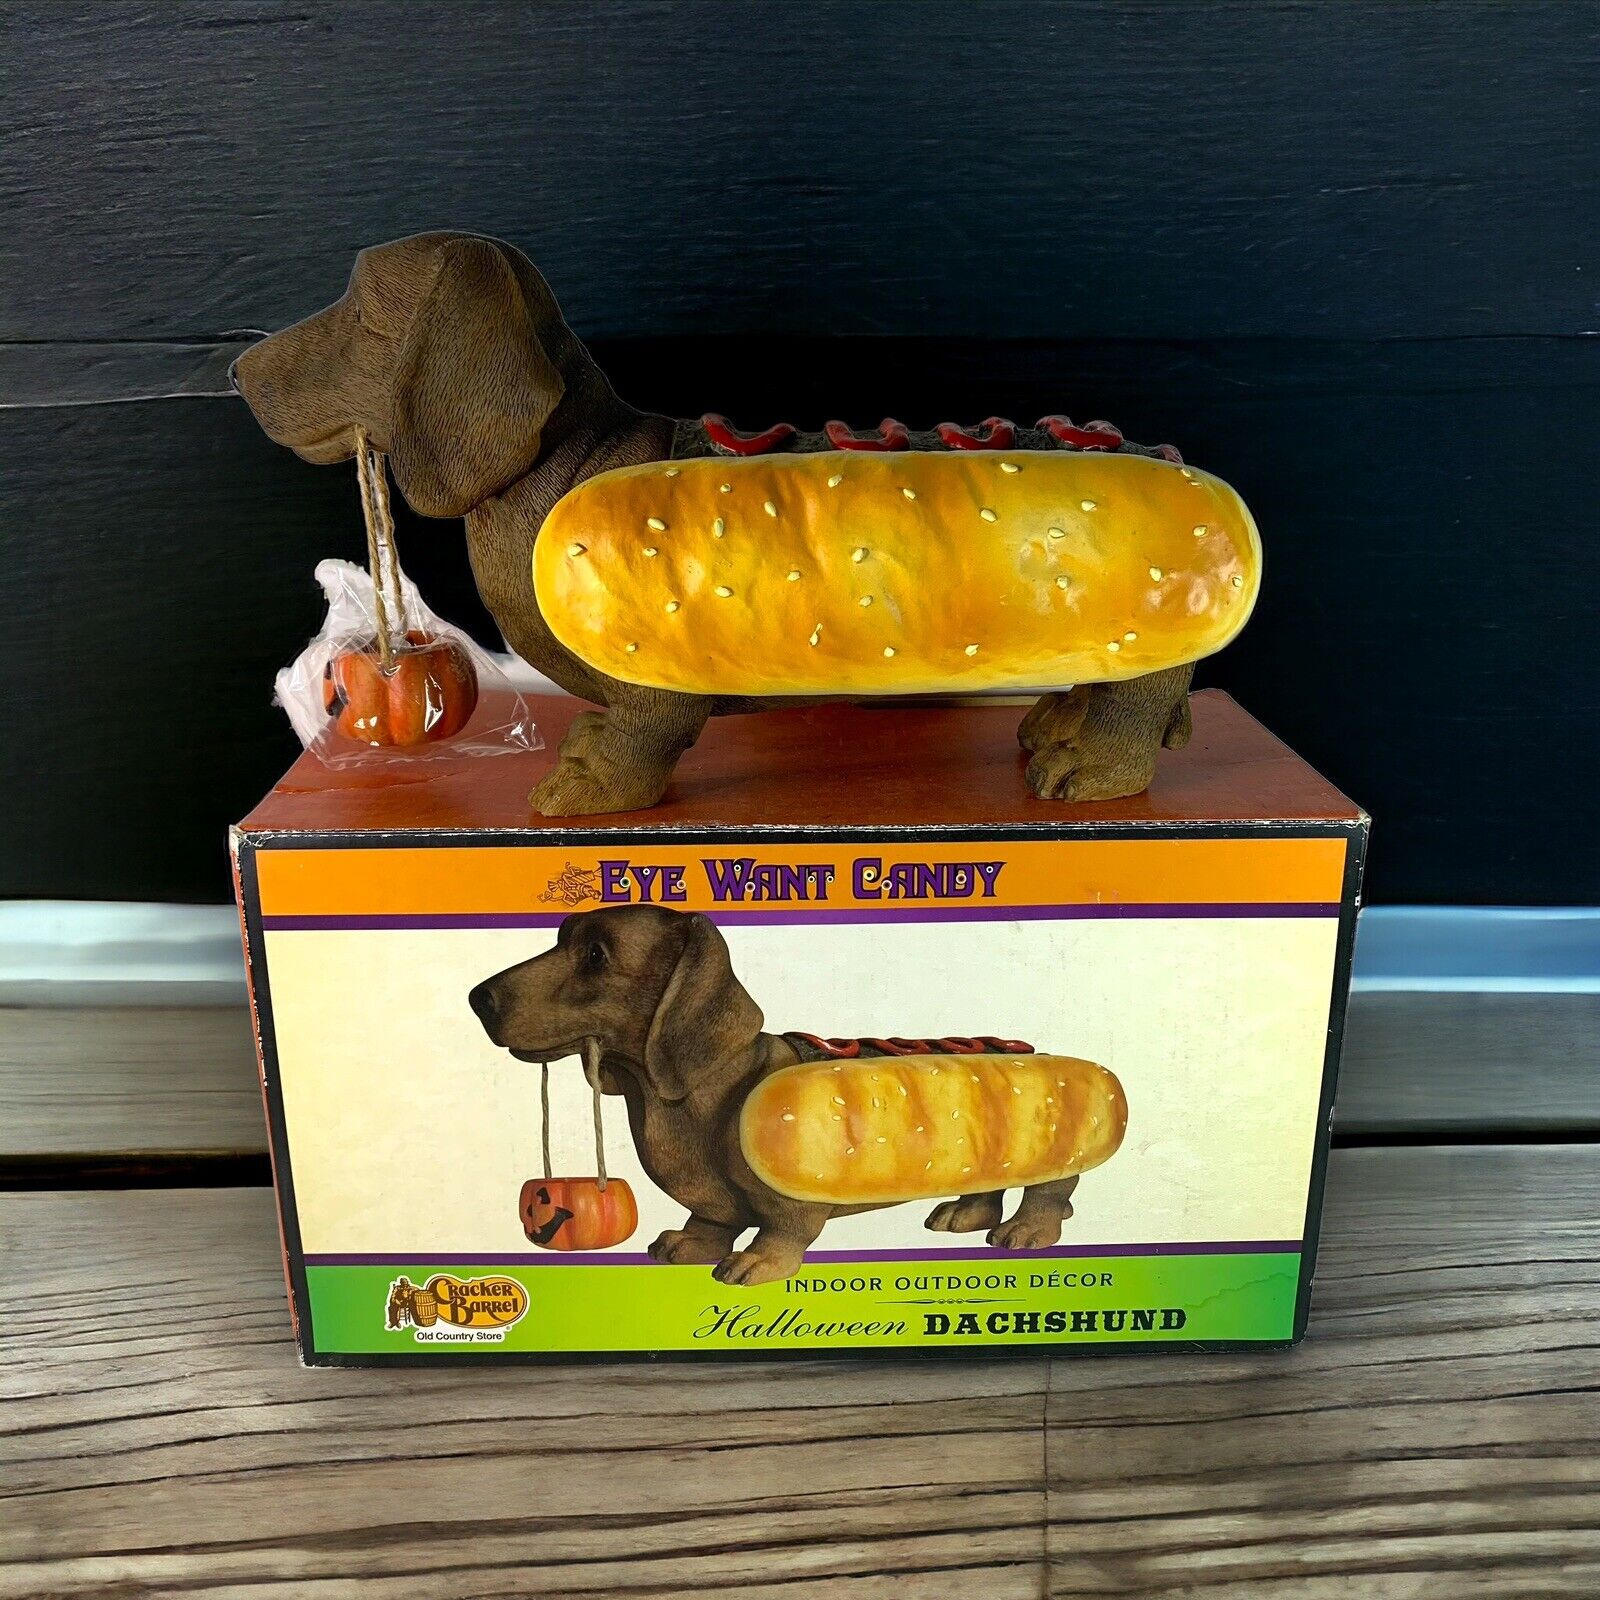 Cracker Barrel Outdoor Decor Halloween Dachshund Hot Dog Figure Too Cute Spook